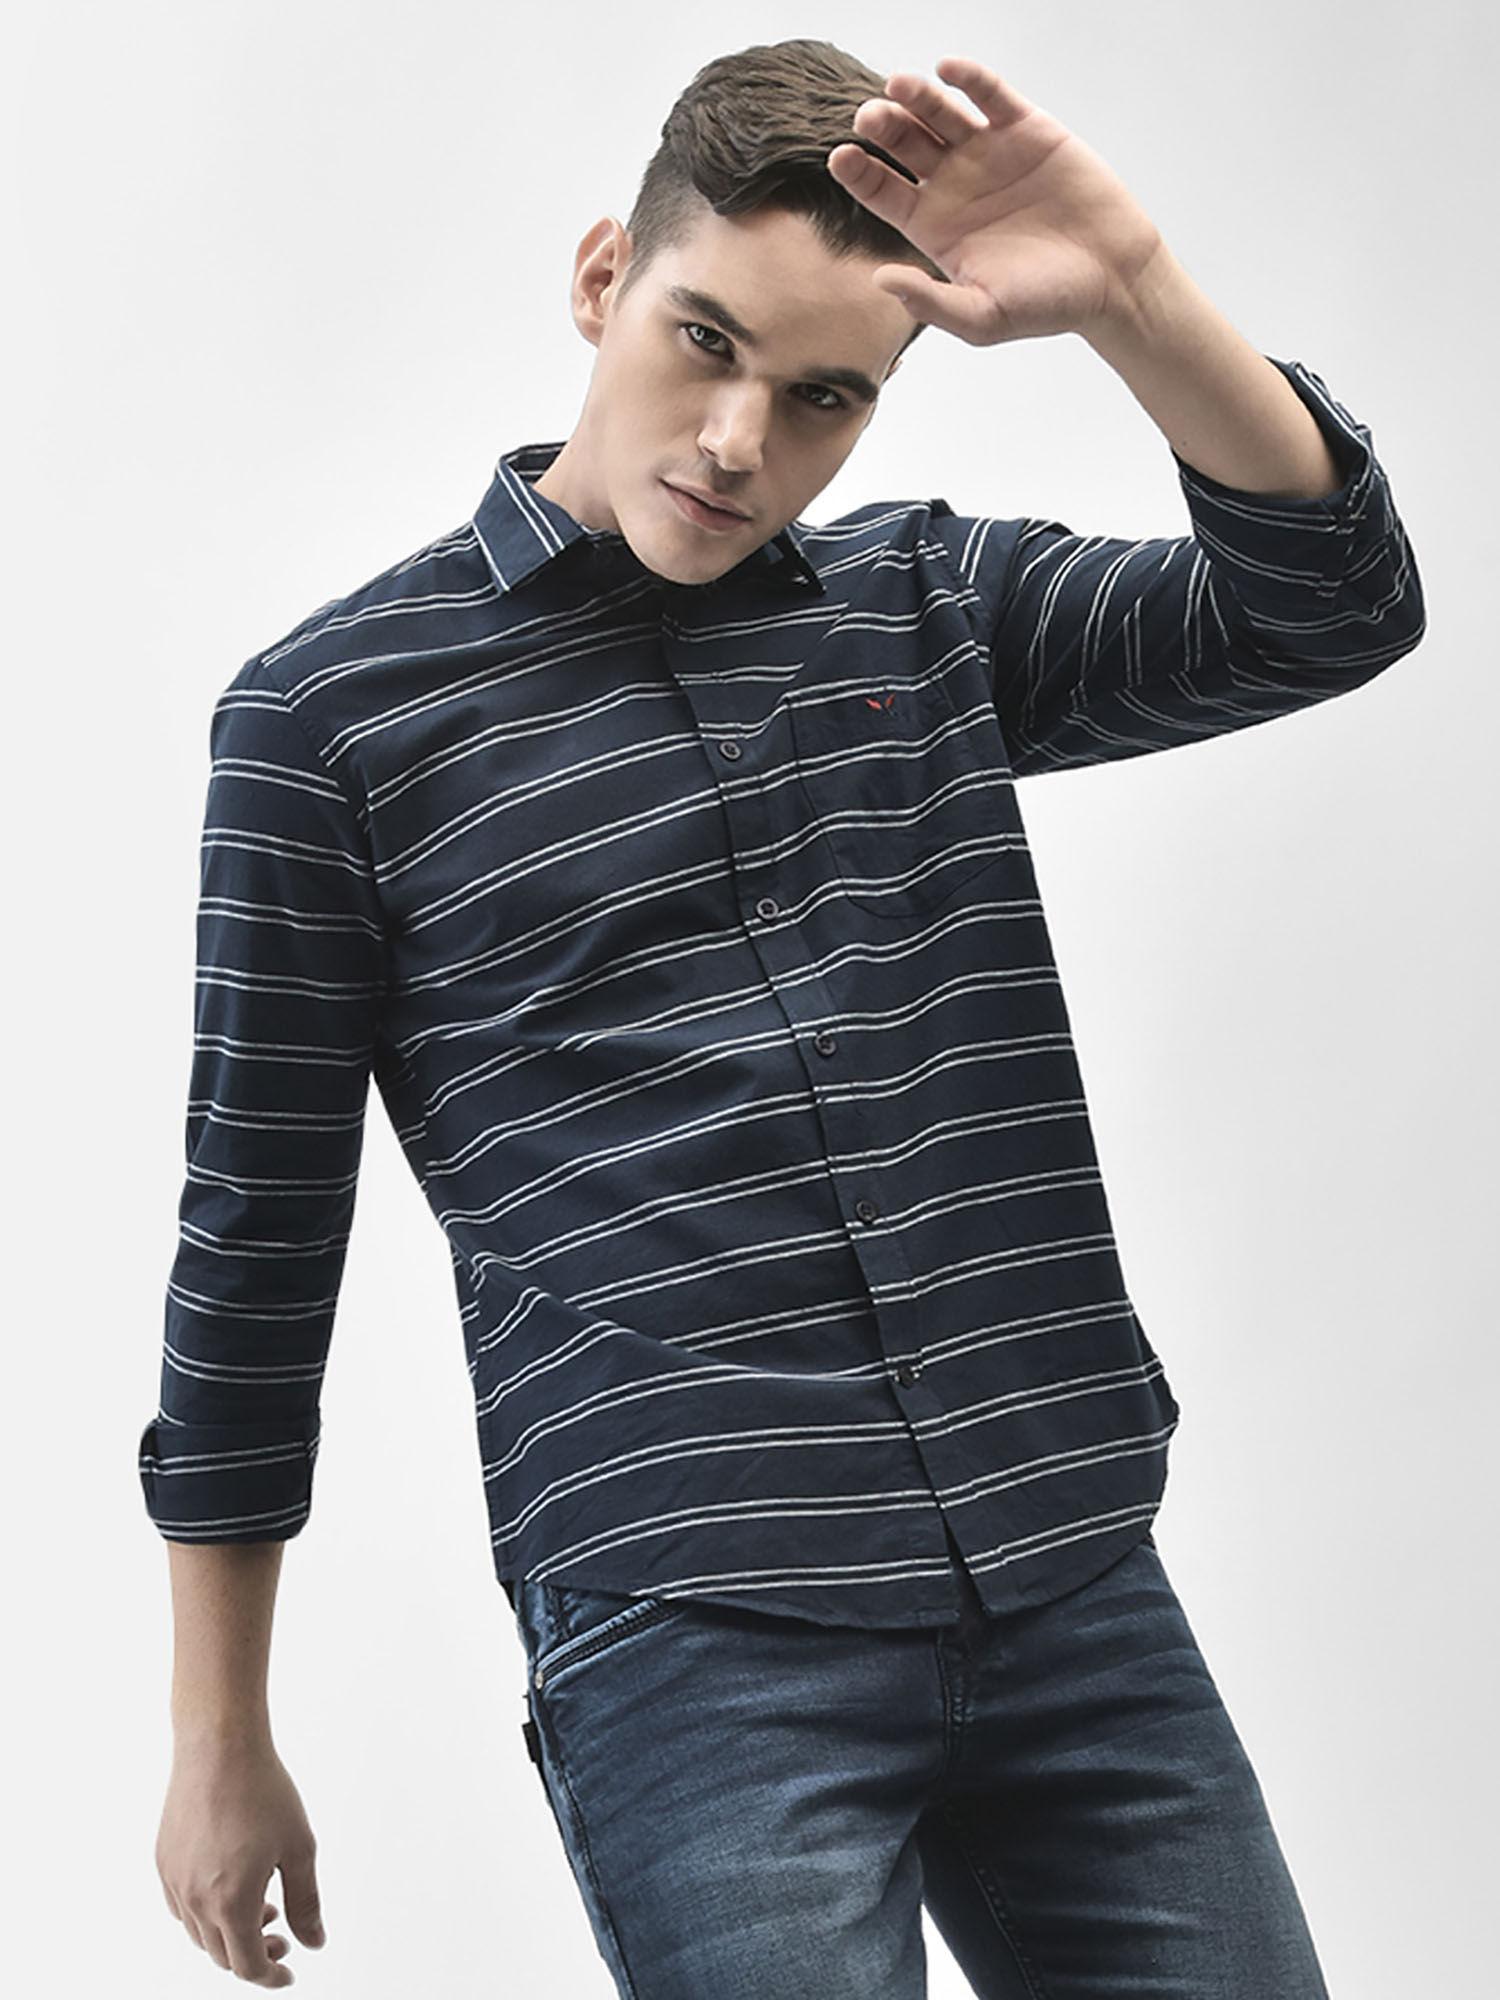 men's-navy-blue-striped-shirt